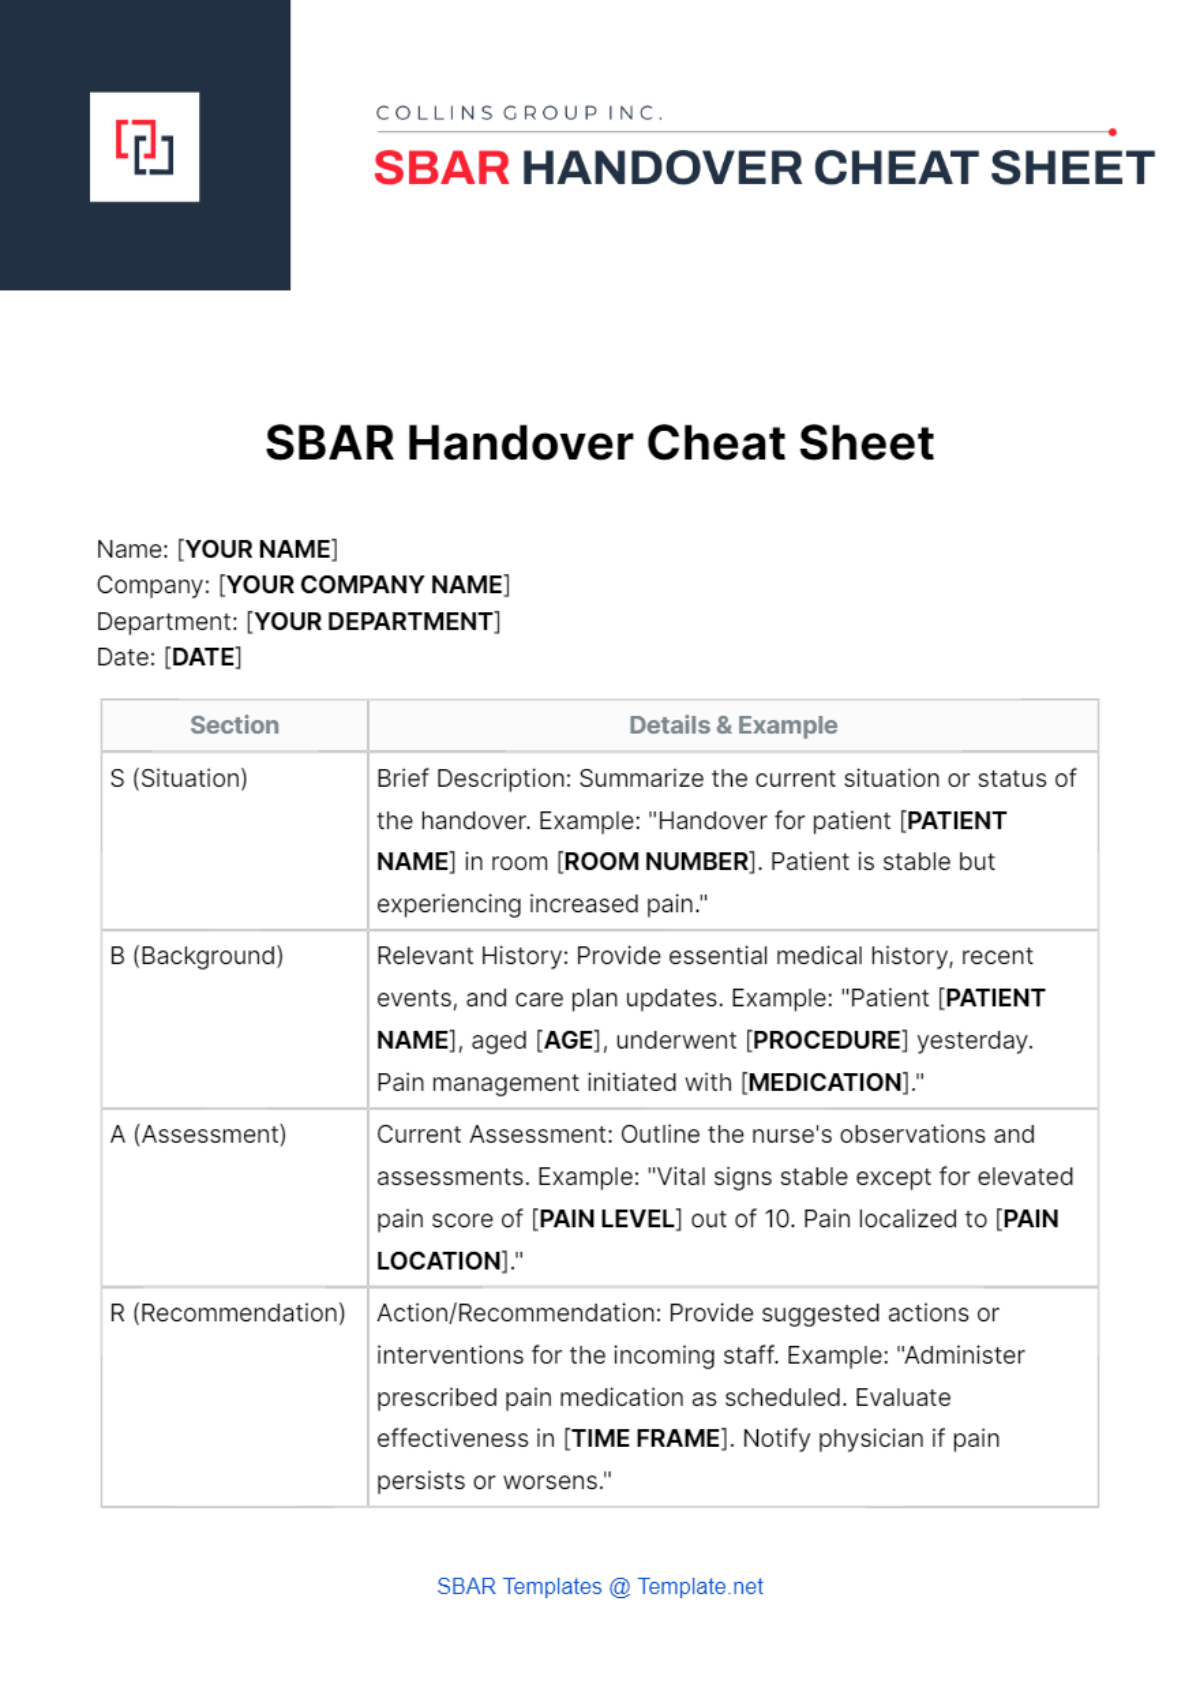 Free SBAR Handover Cheat Sheet Template